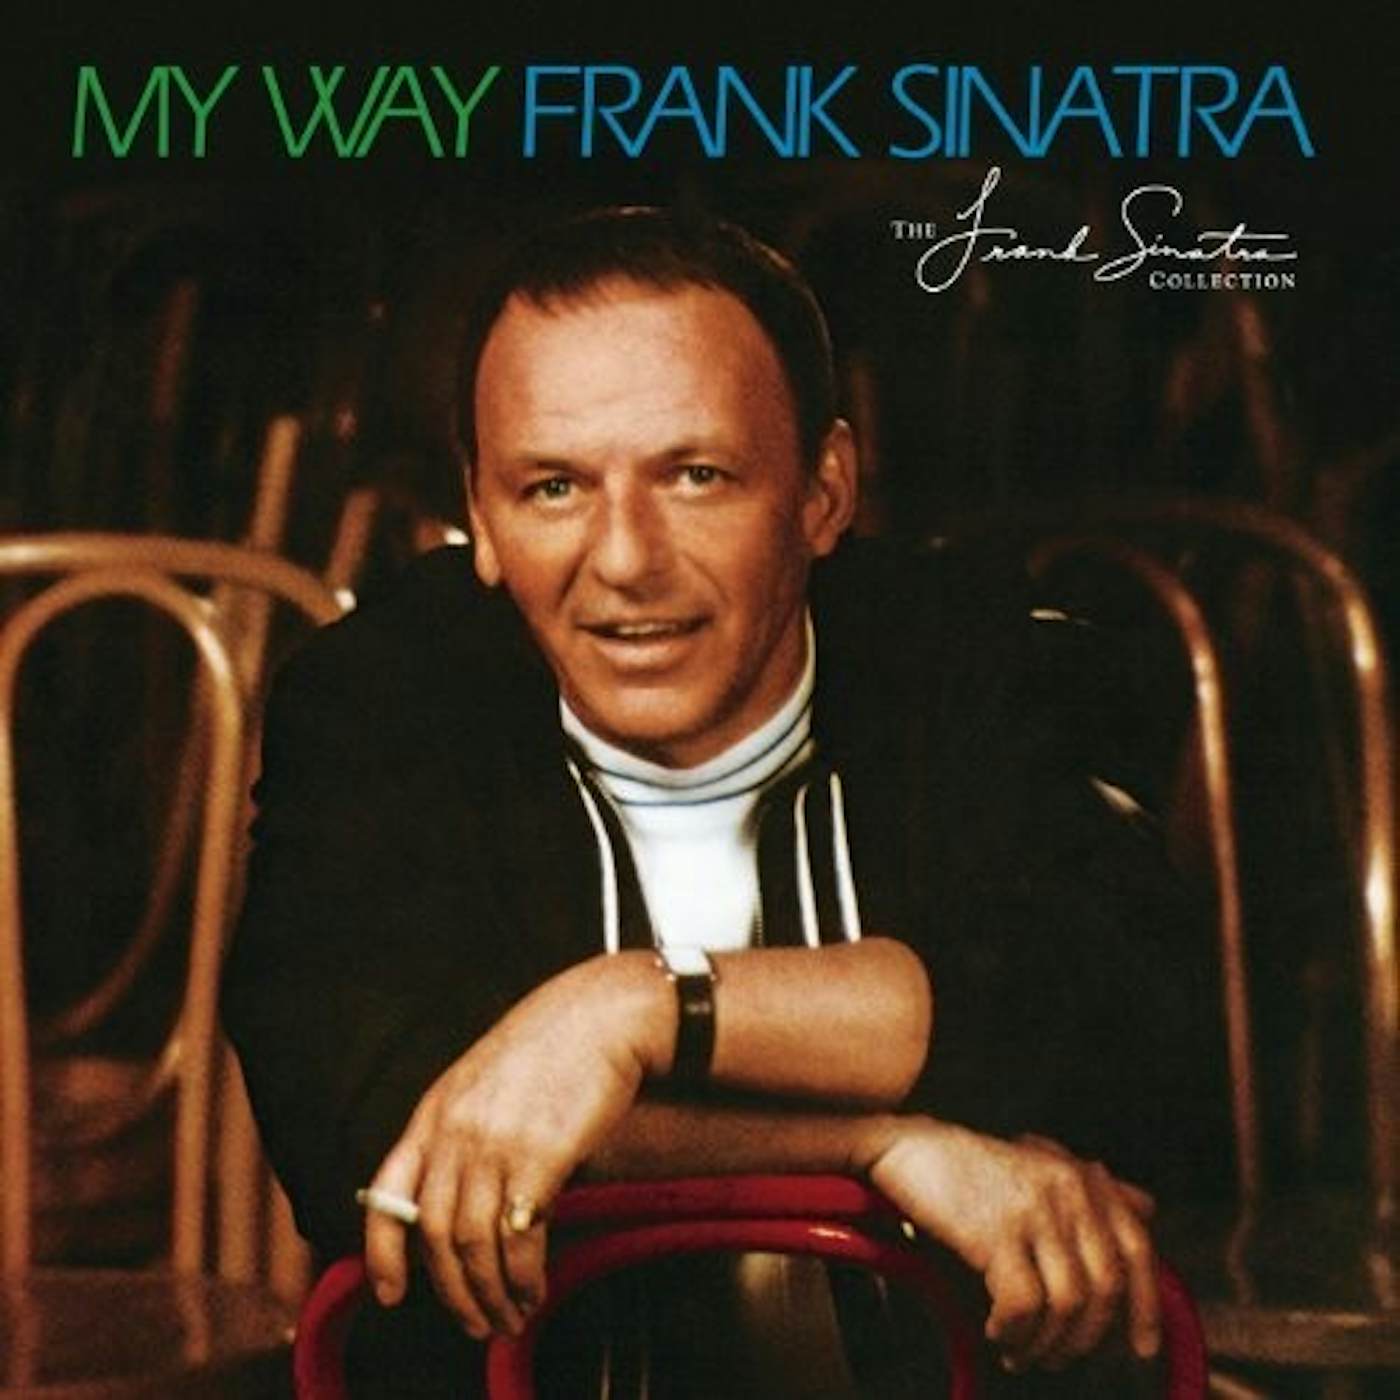 Frank Sinatra MY WAY Vinyl Record